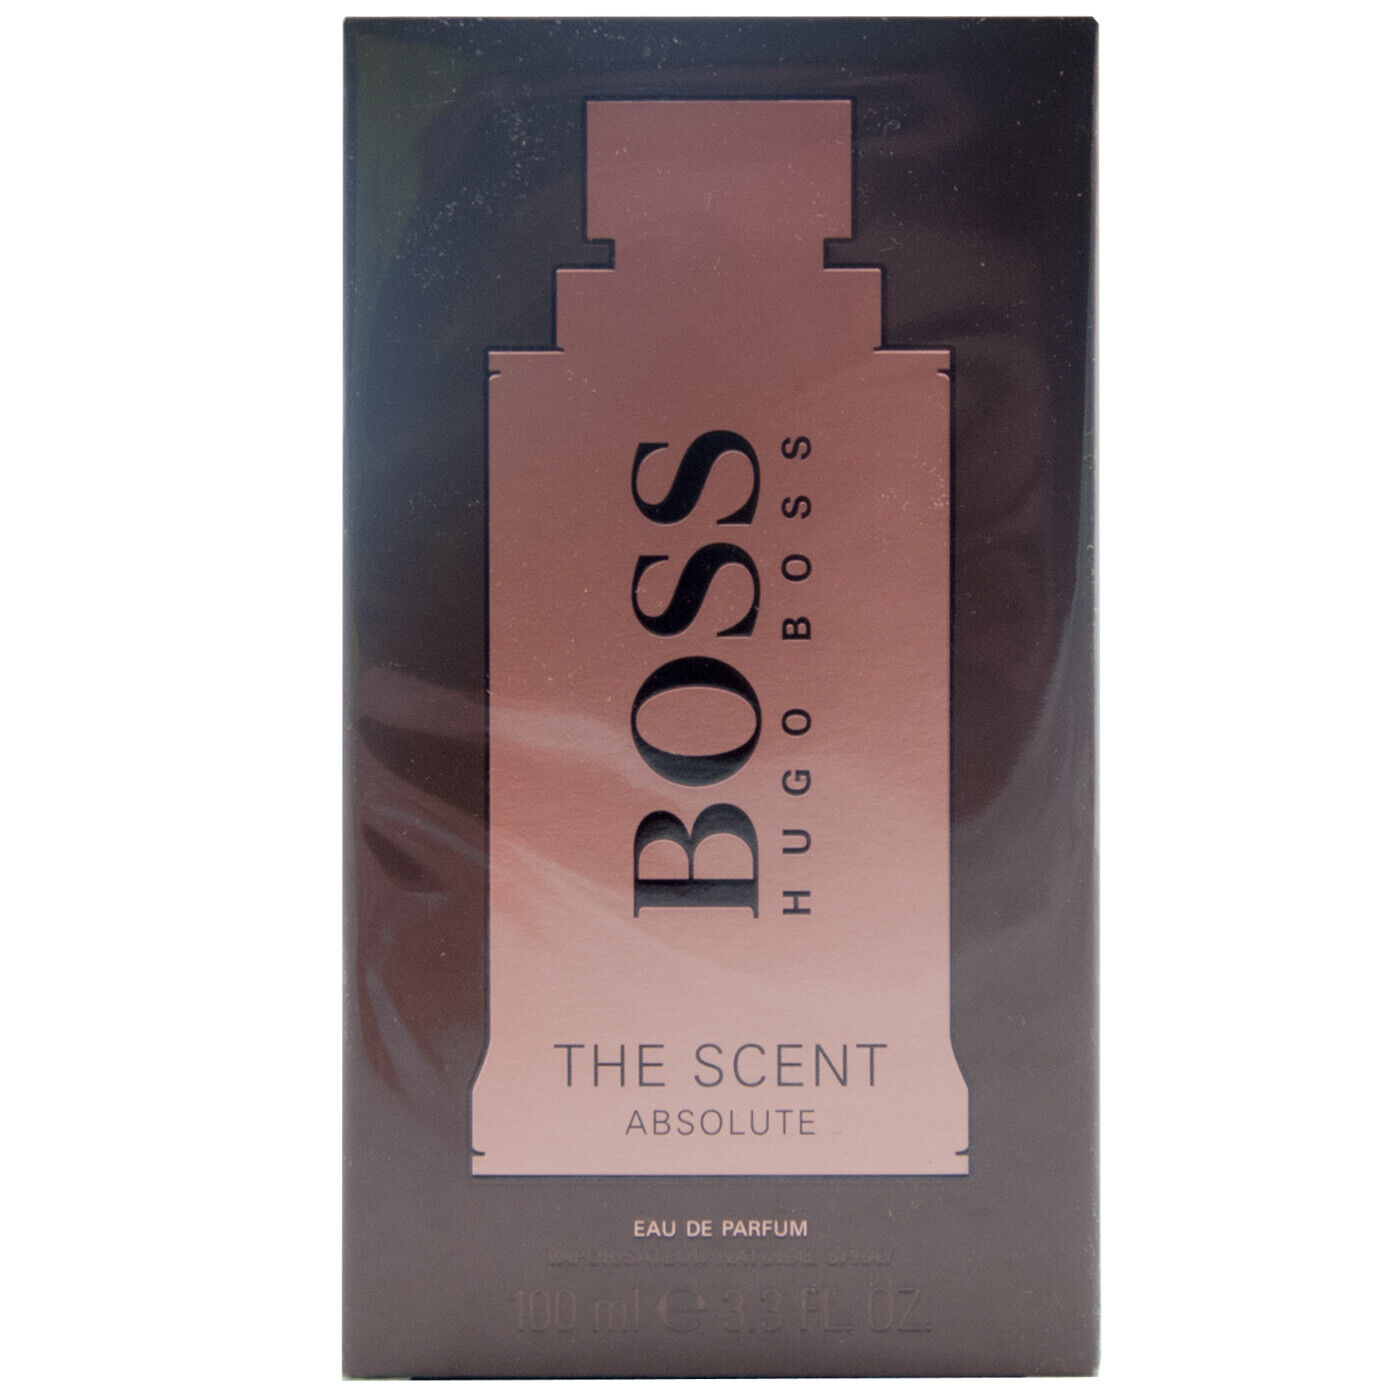 Hugo Boss Man Extreme Fragrance Review (2016) 